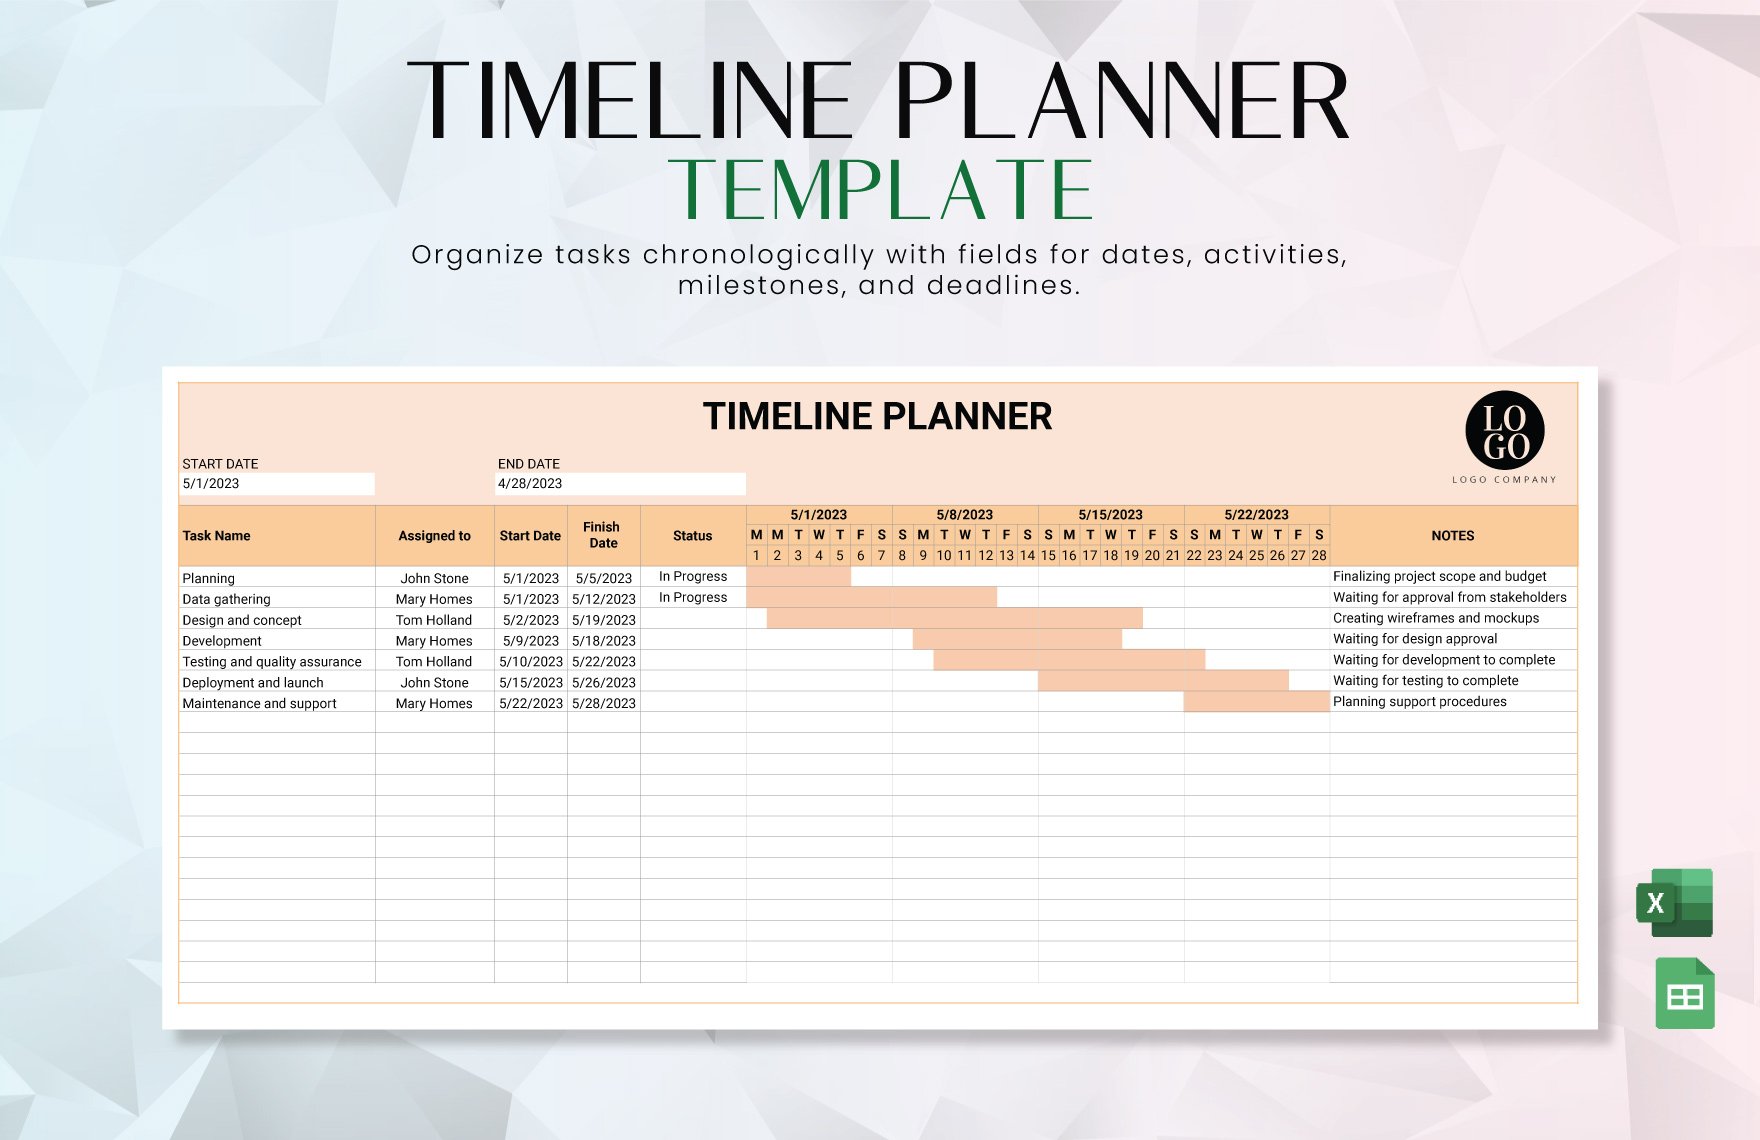 Timeline Planner Template in Excel, Google Sheets